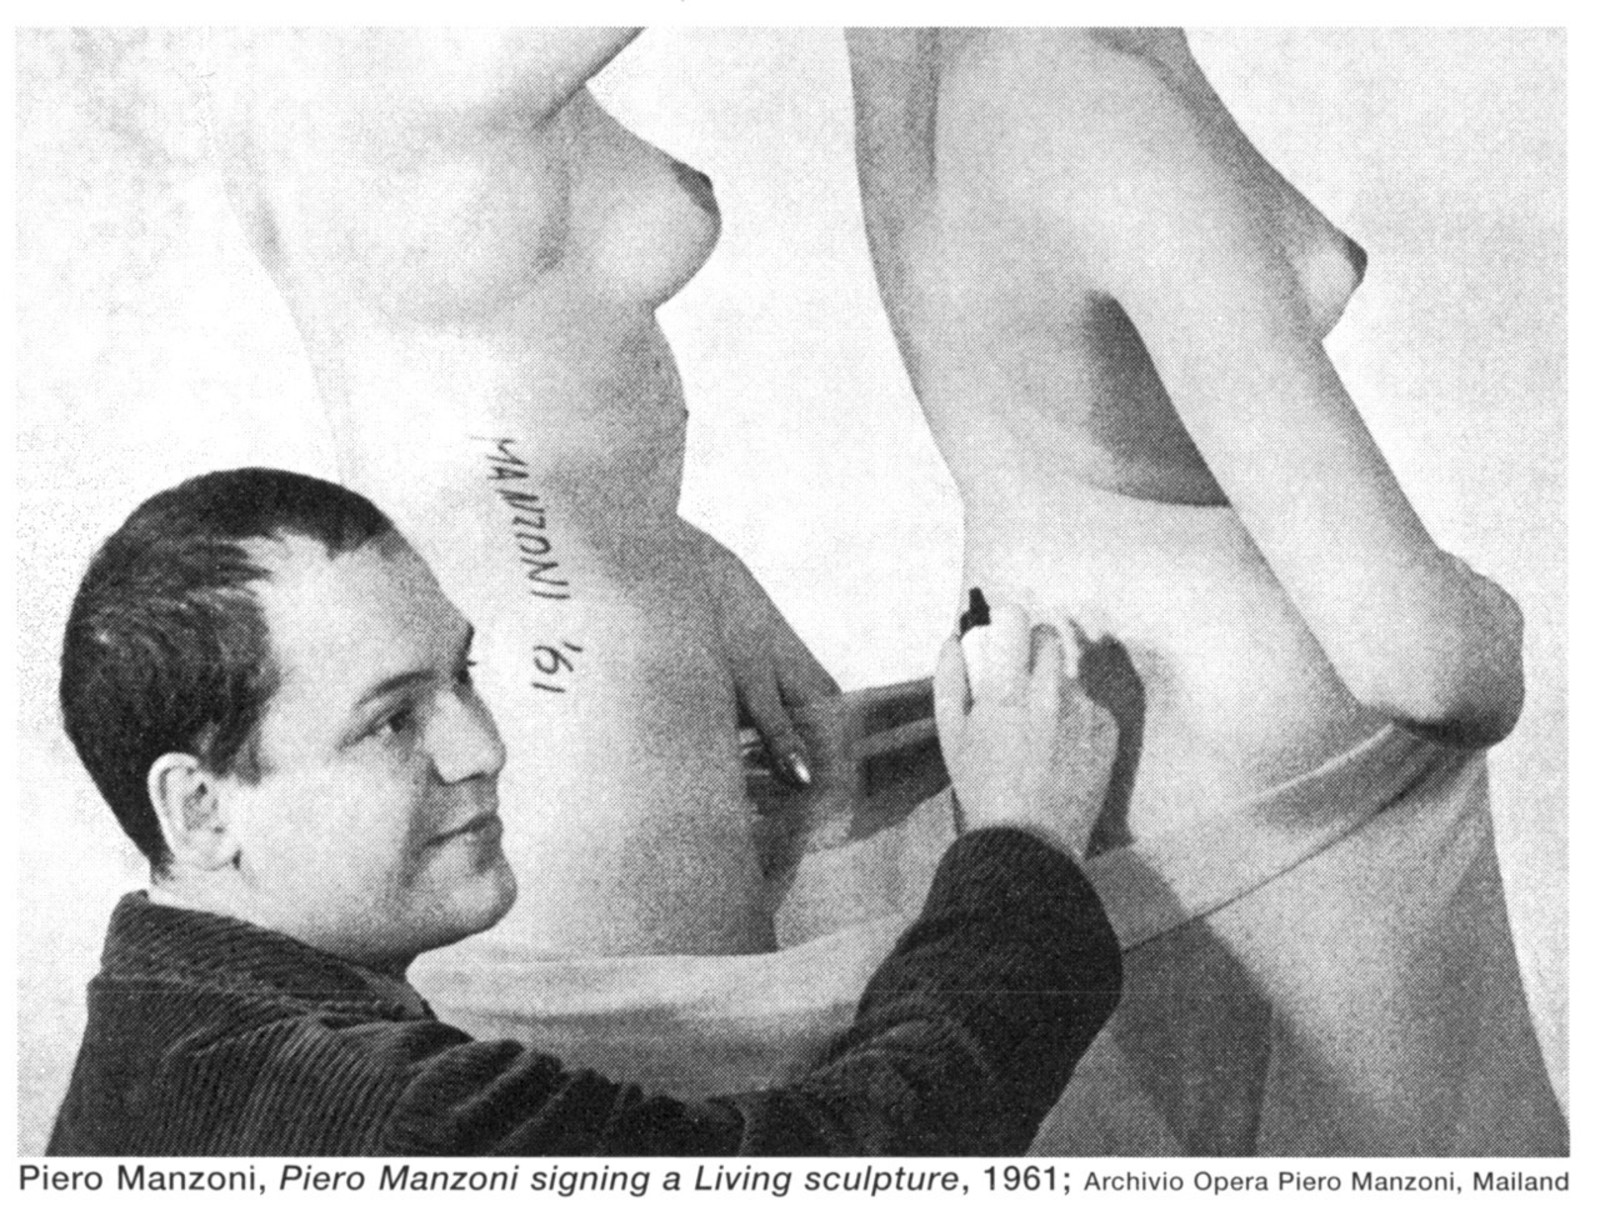 Piero Manzoni. Living Sculpture. 1961. Galleria La Tartaruga (Rome, Italy). Photo: Piero Manzoni signs a living sculpture. Private archive of Piero Manzoni.